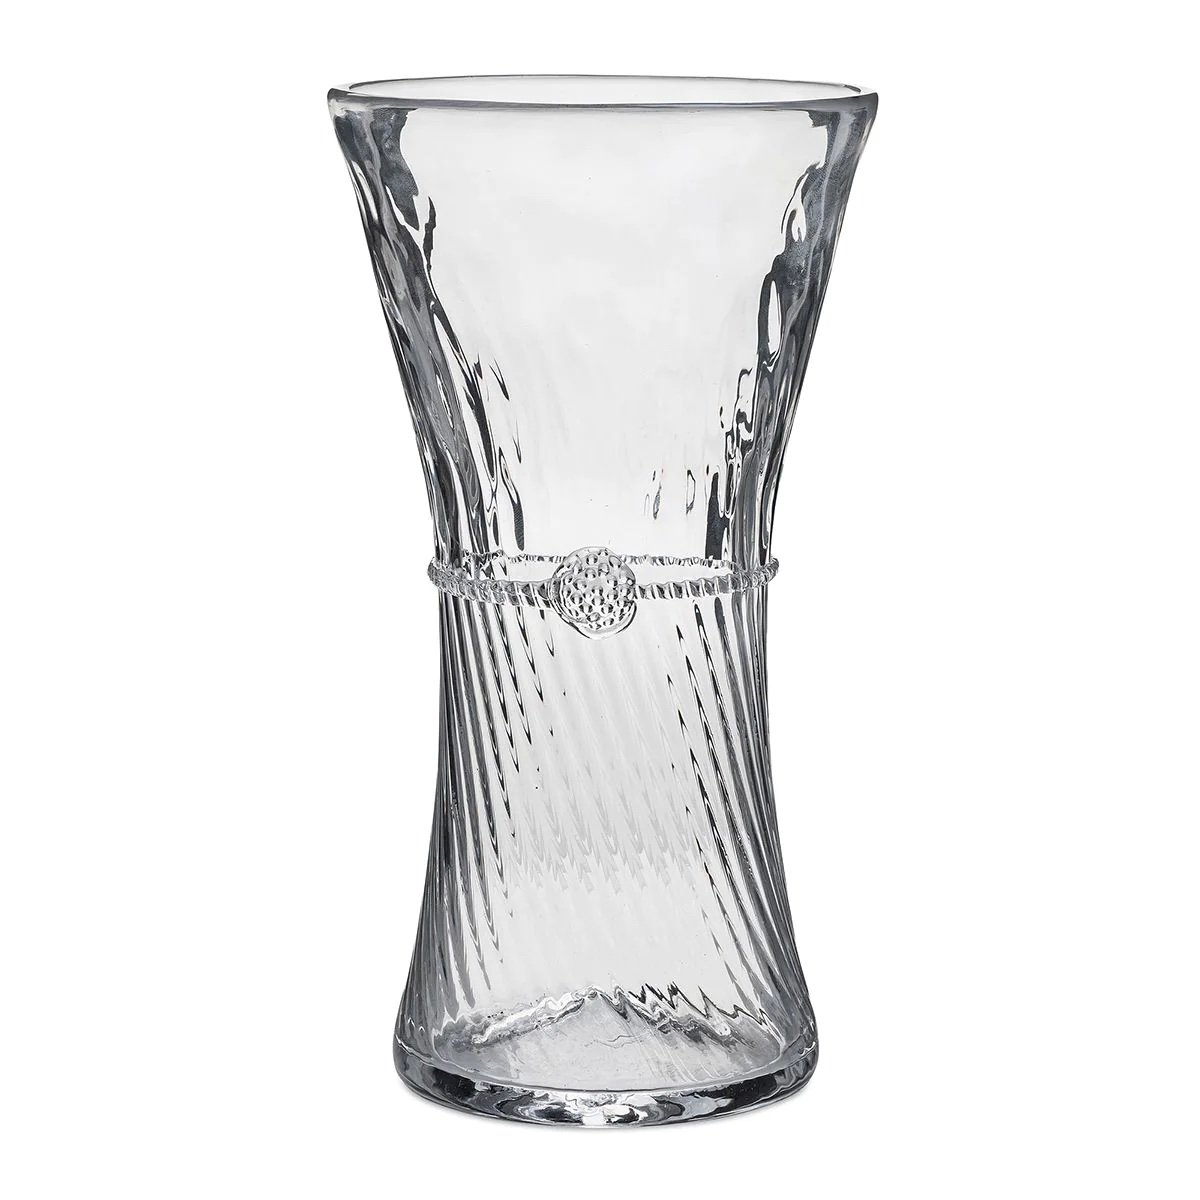 37268- 8" Gorham Corset Vase- $125- Received